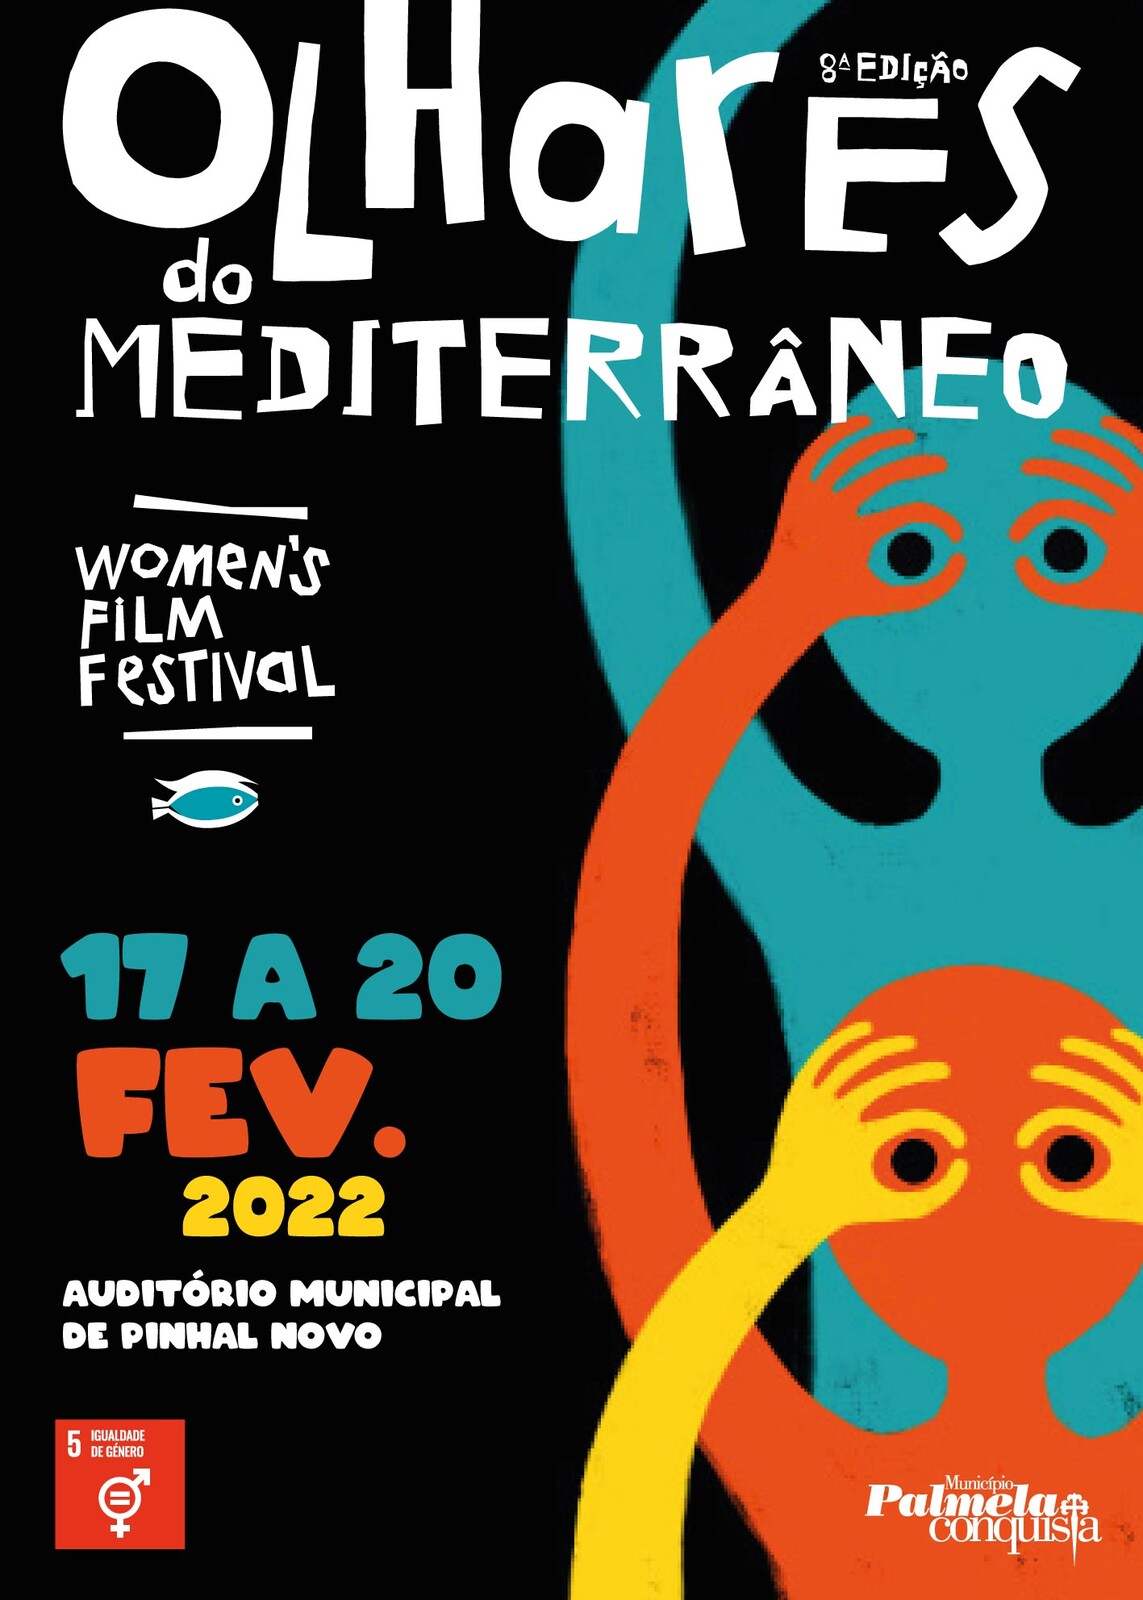 "OLHARES DO MEDITERRÂNEO - WOMANS FILM FESTIVAL"